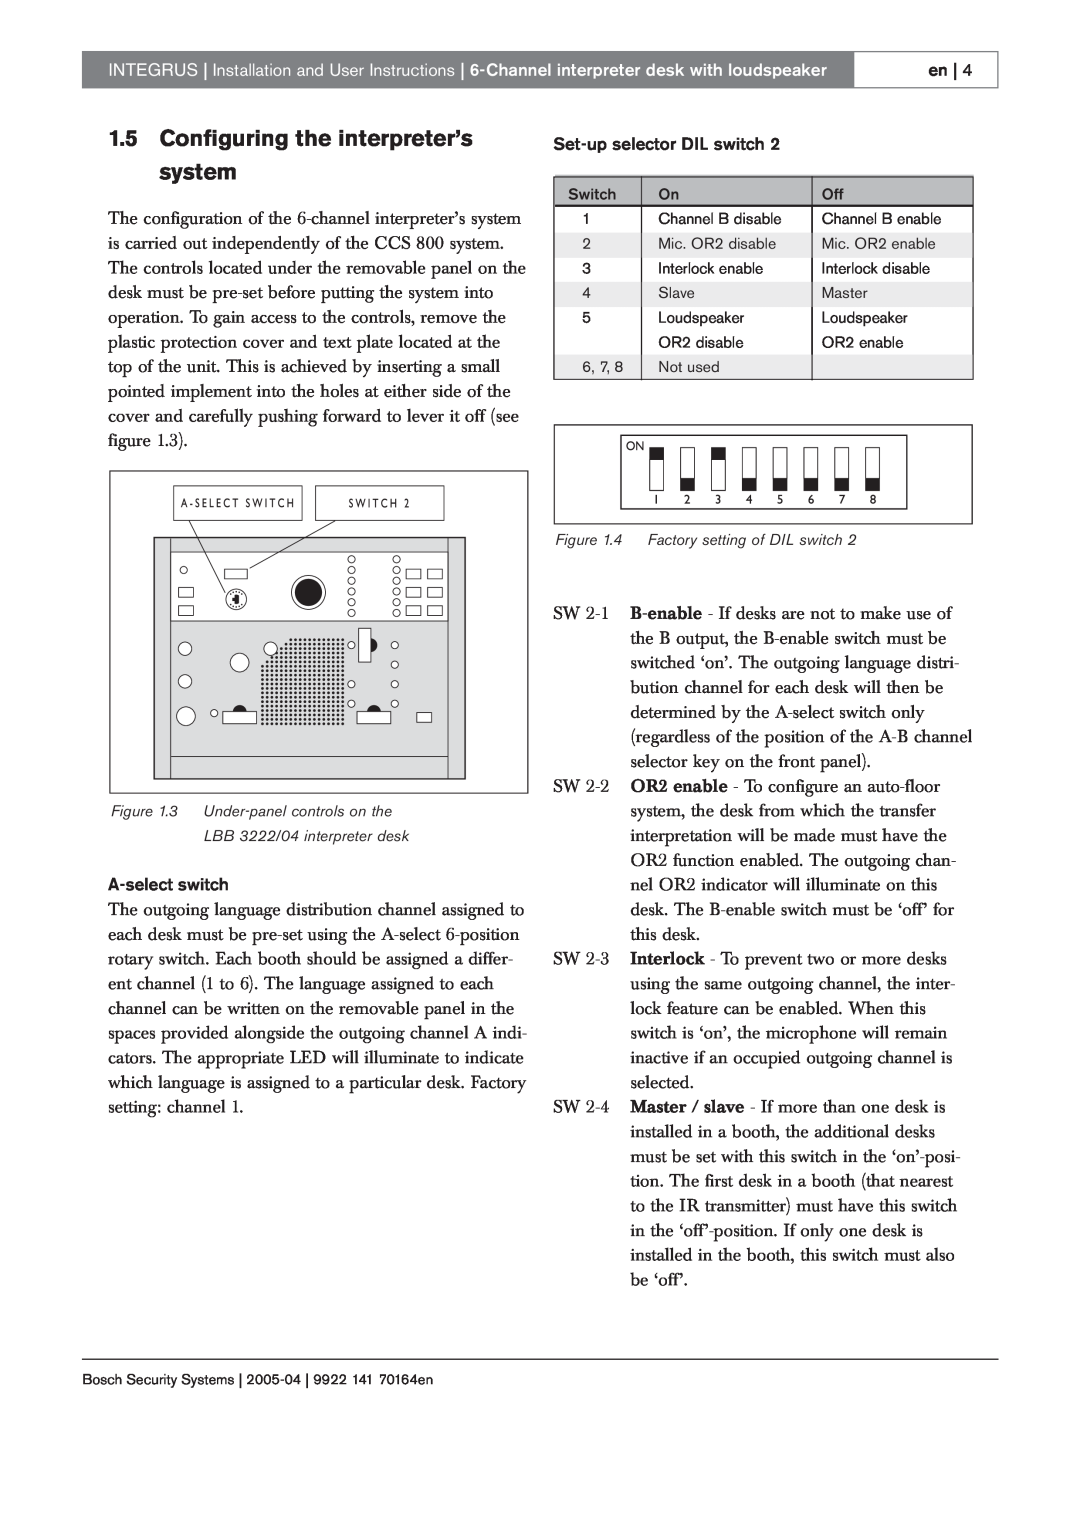 Bosch Appliances 20, LBB 3422, LBB 3222 manual 1.5Configuring the interpreter’s system, en 